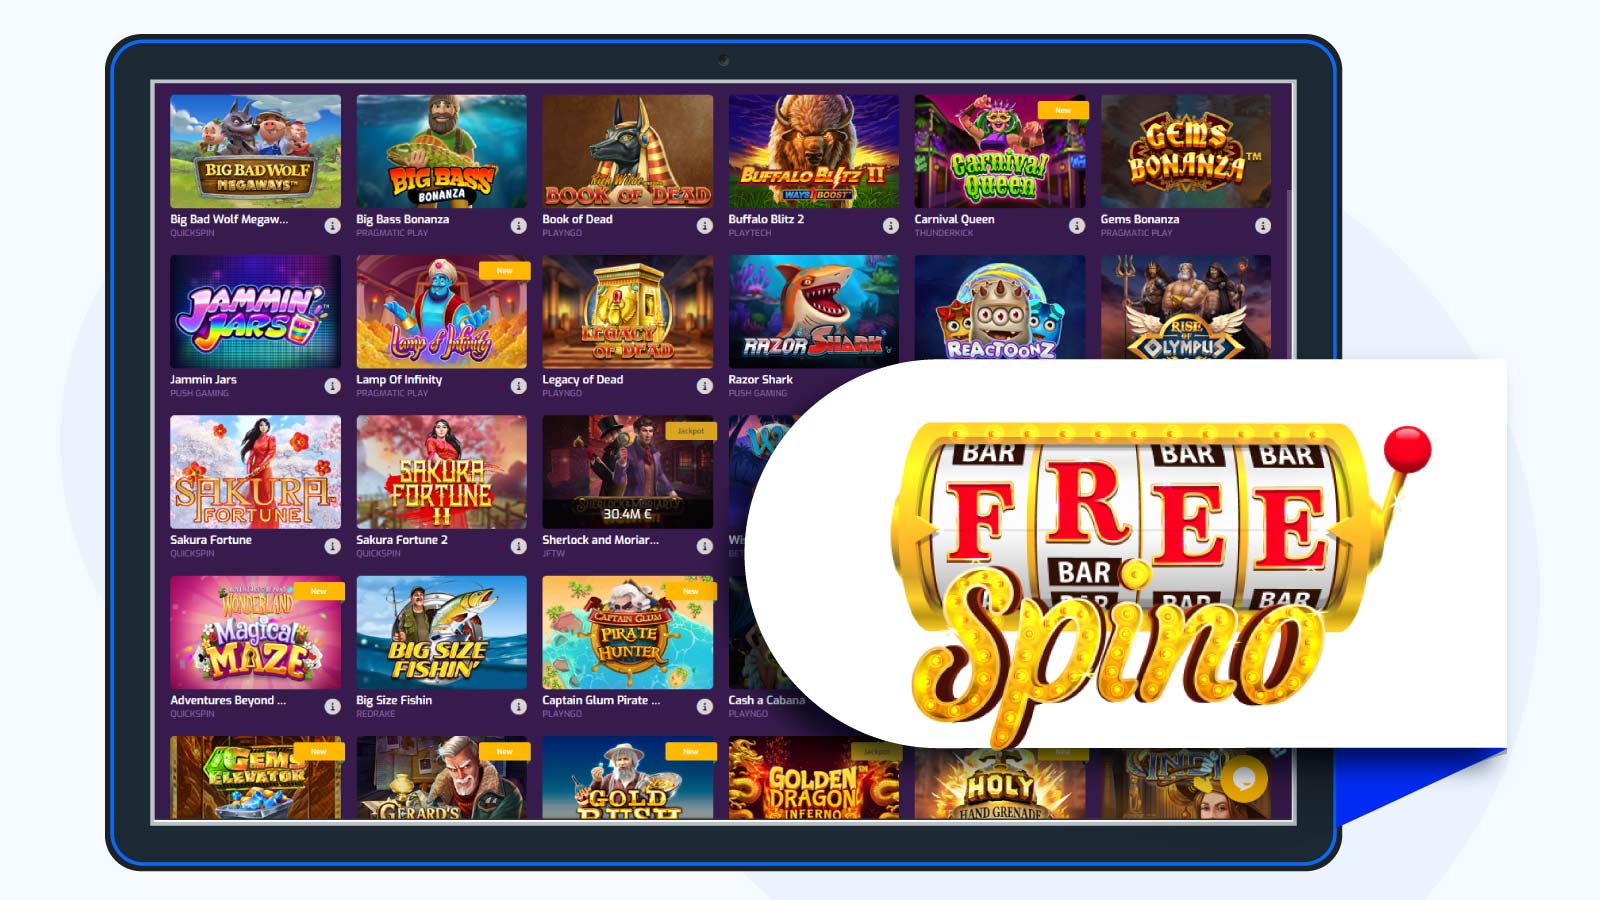 FreeSpino Casino slot games slection